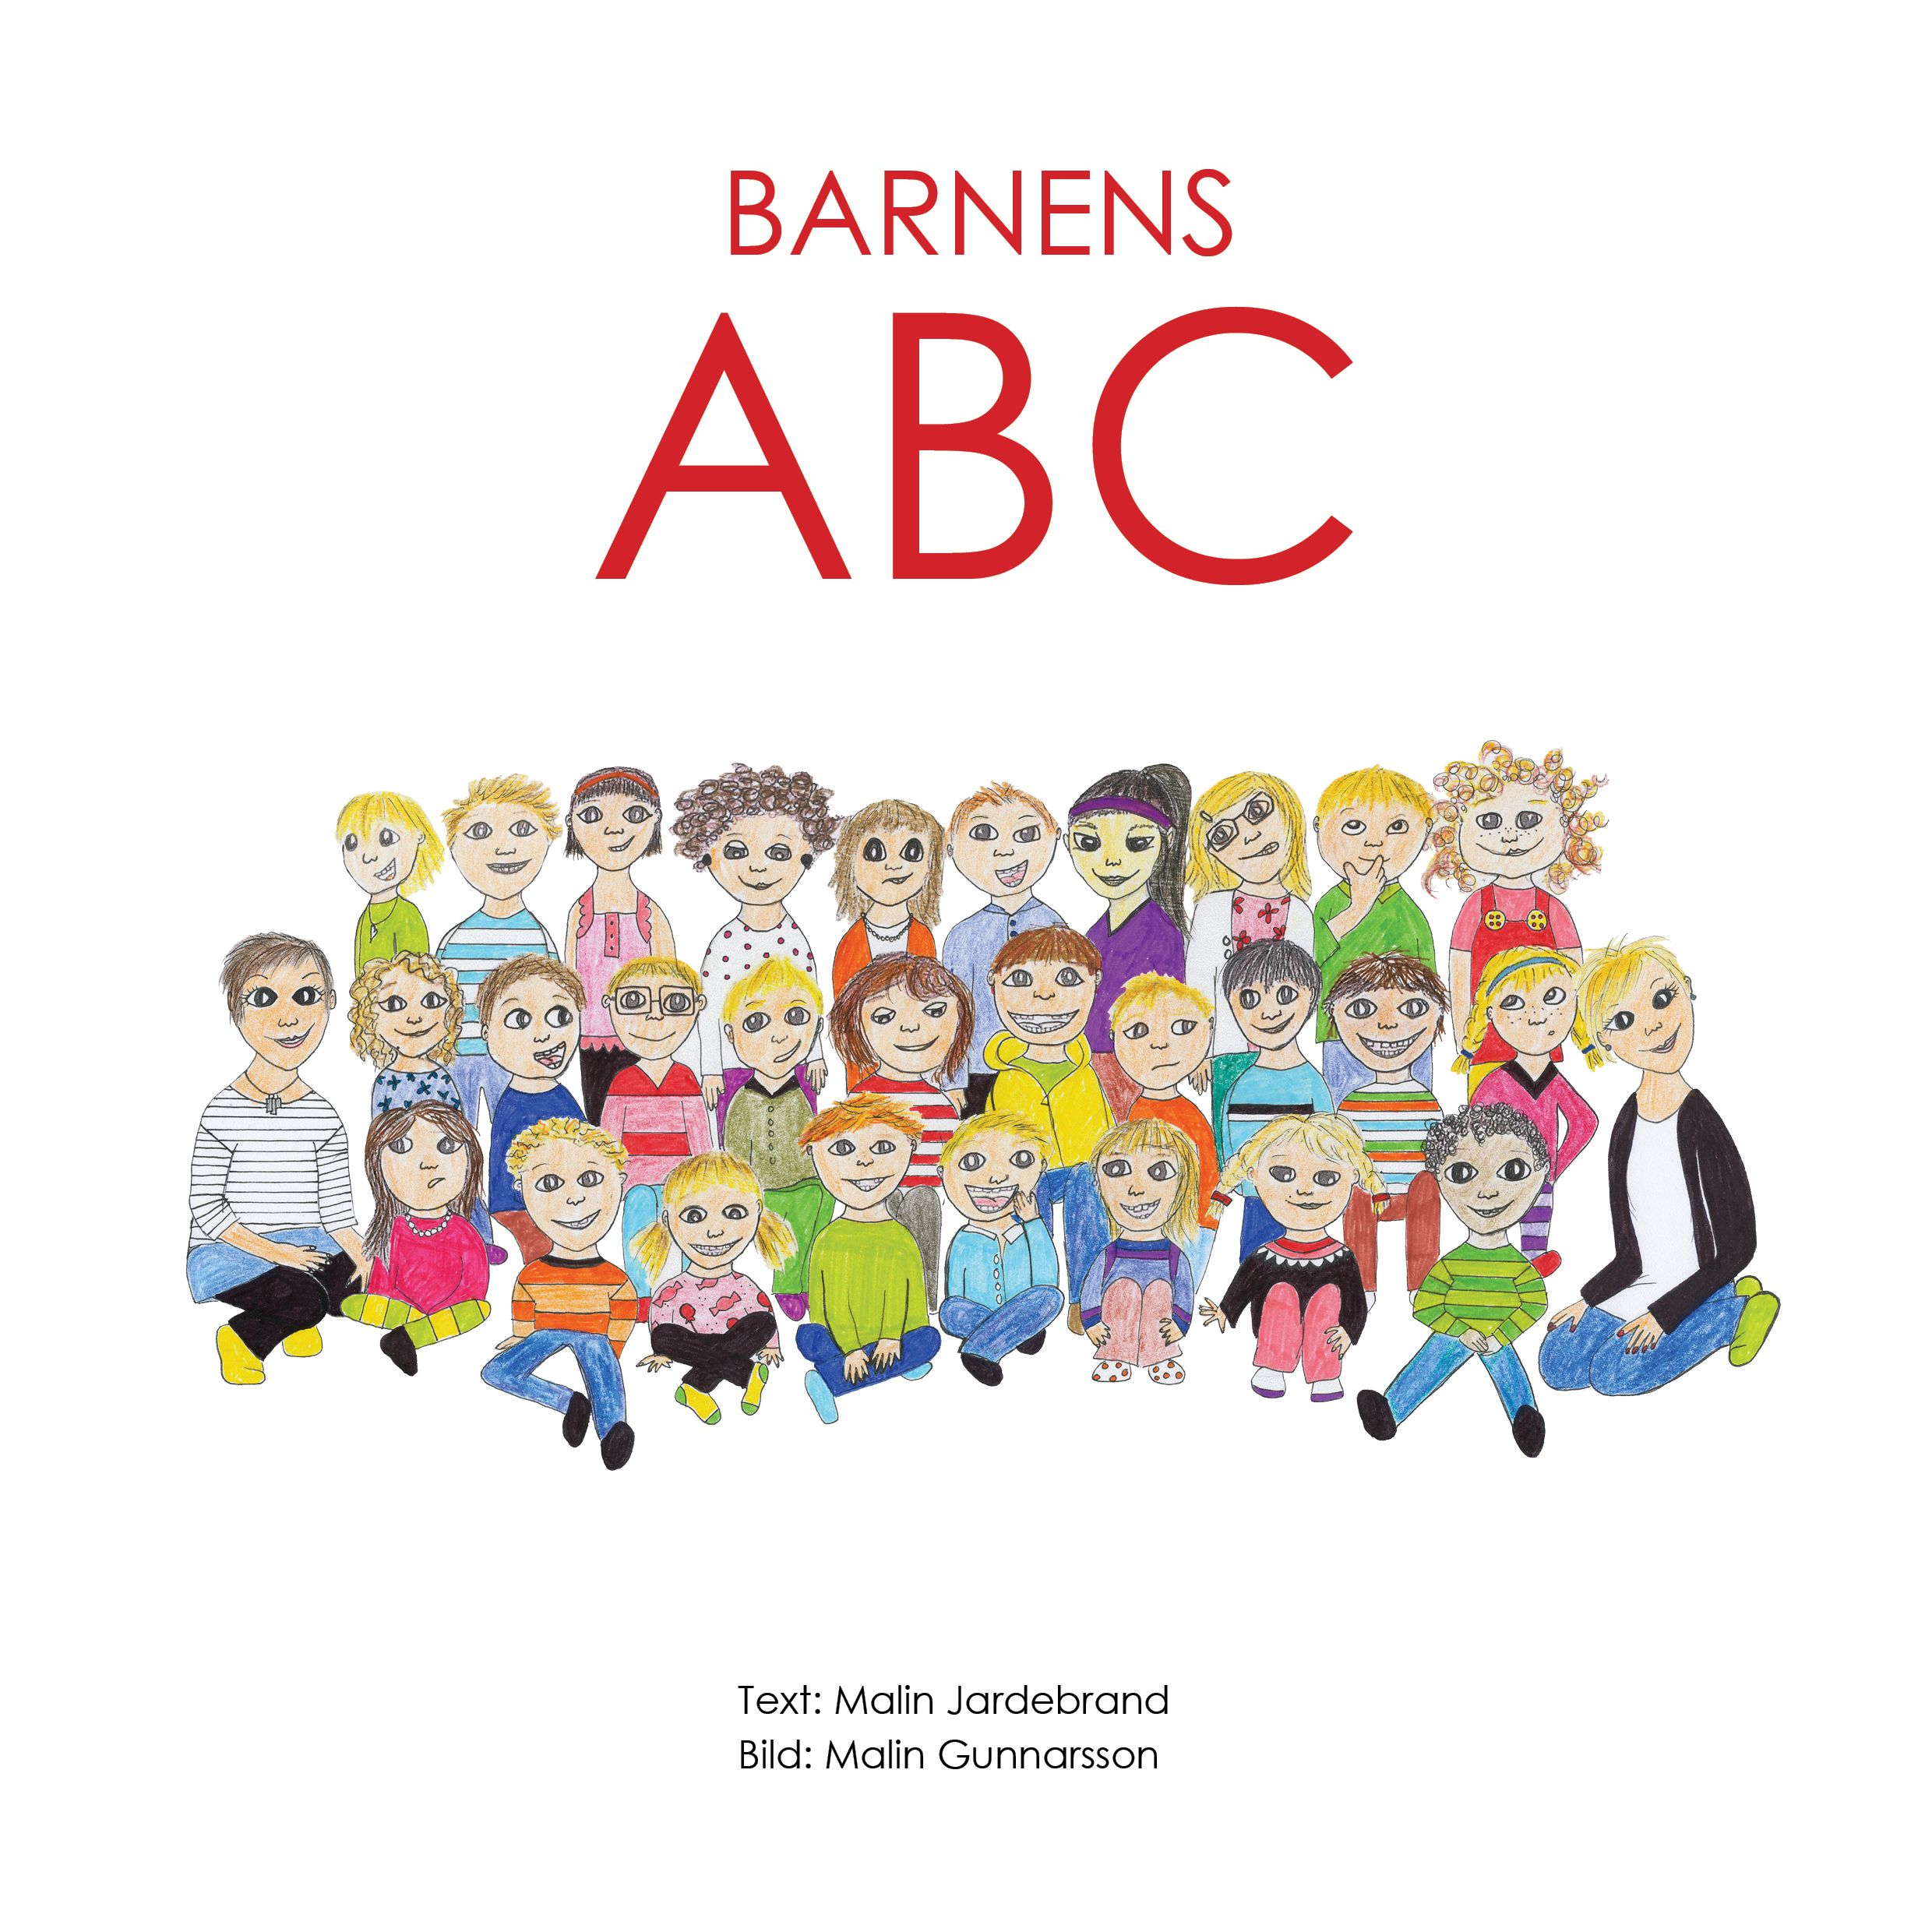 Barnens ABC, e-bog af Malin Jardebrand